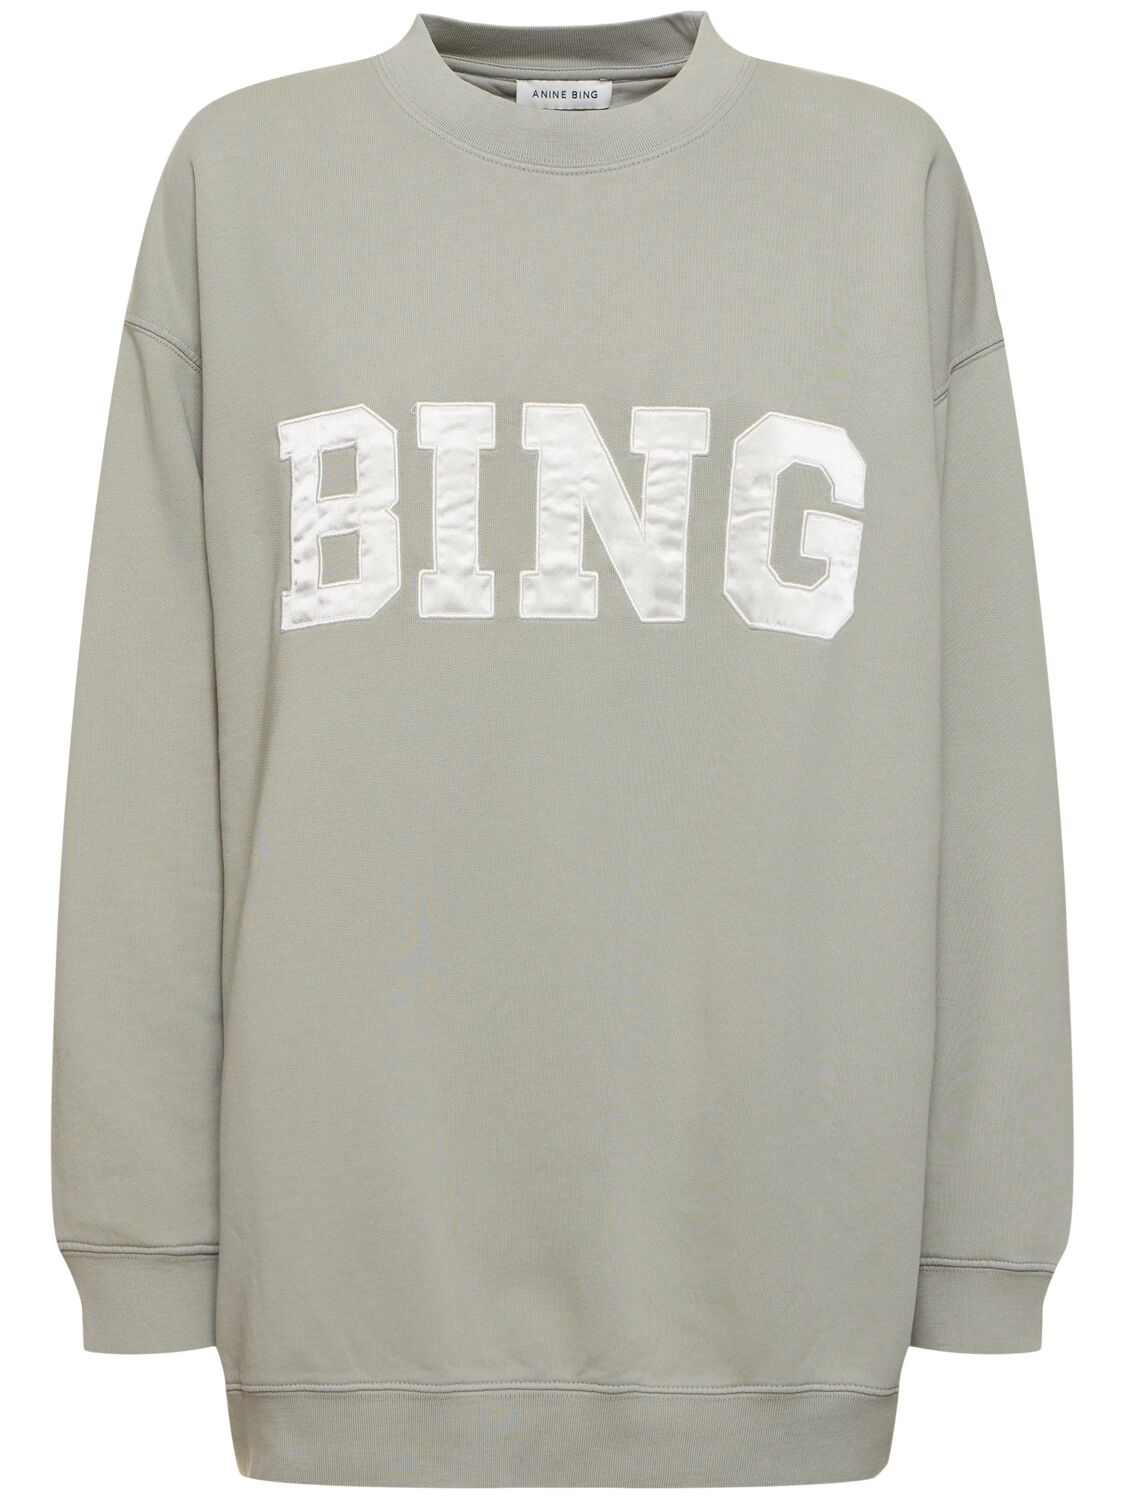 Tyler Bing Cotton Sweatshirt